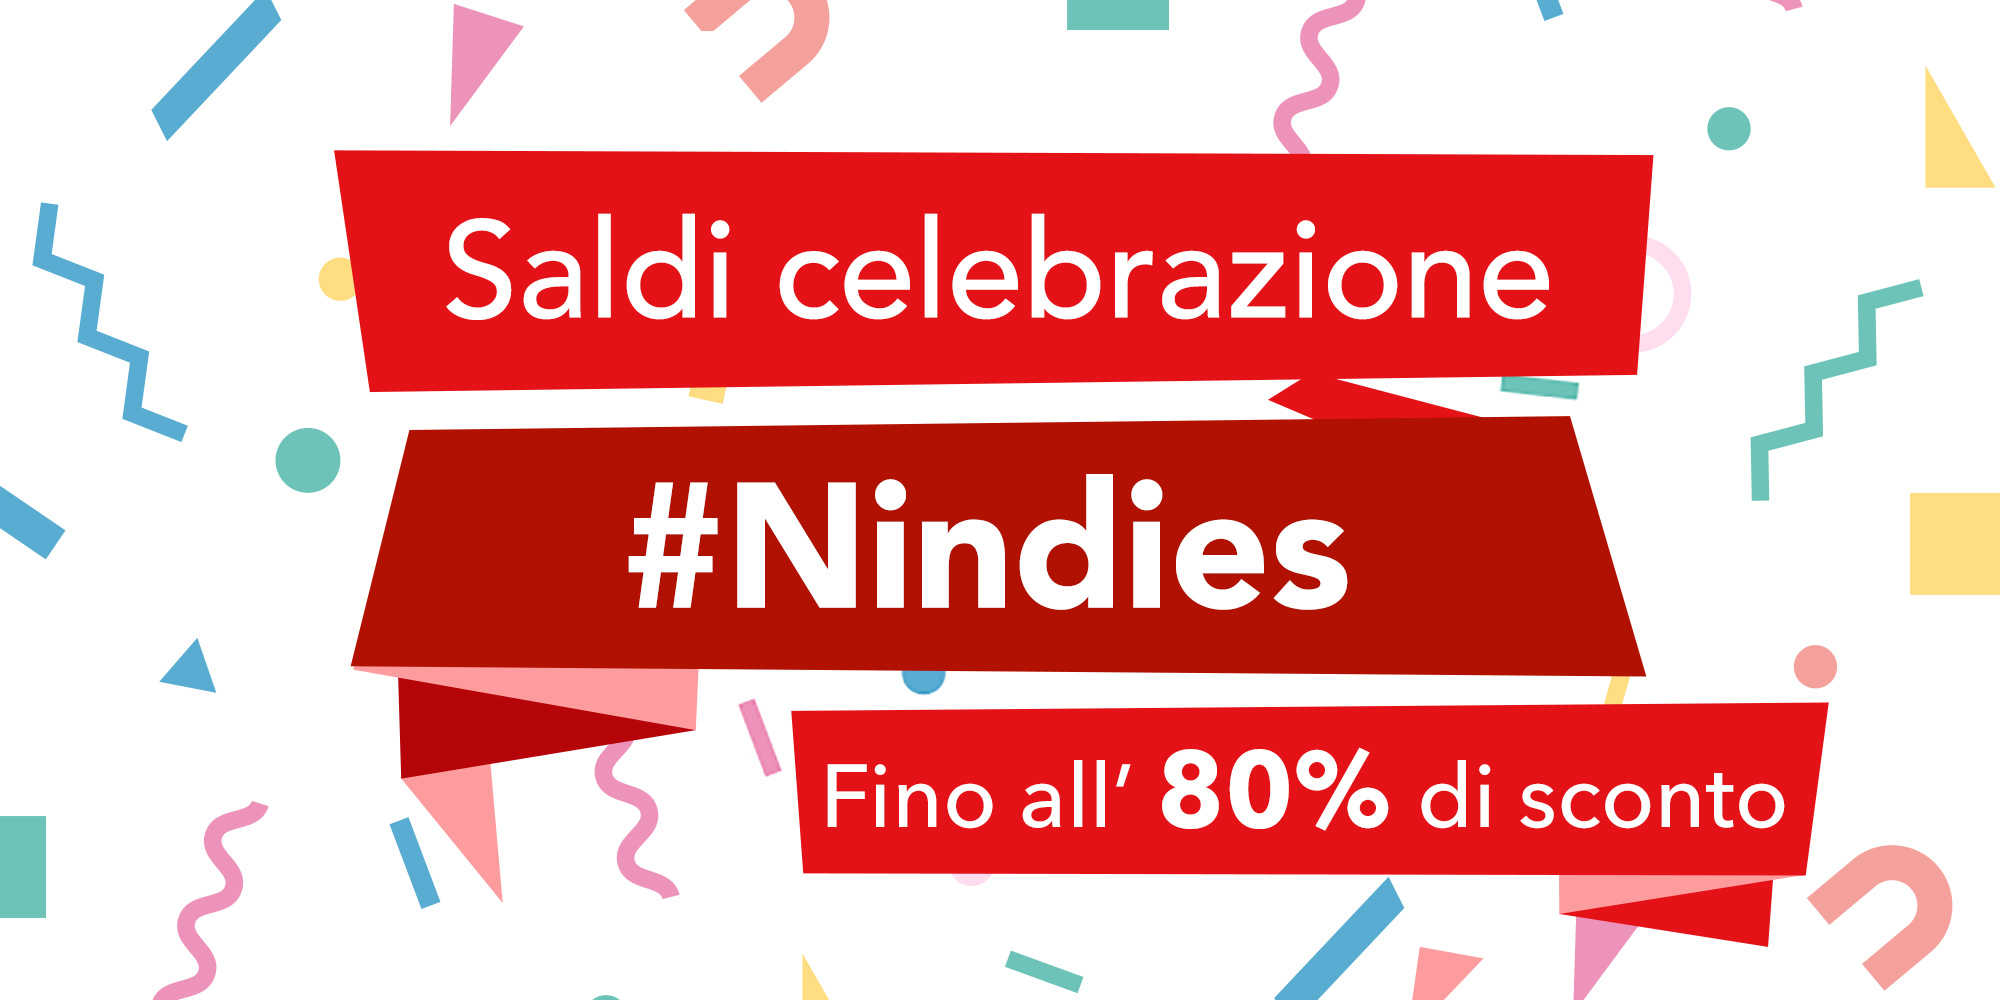 Il Nintendo eShop presenta i saldi celebrazione #Nindies